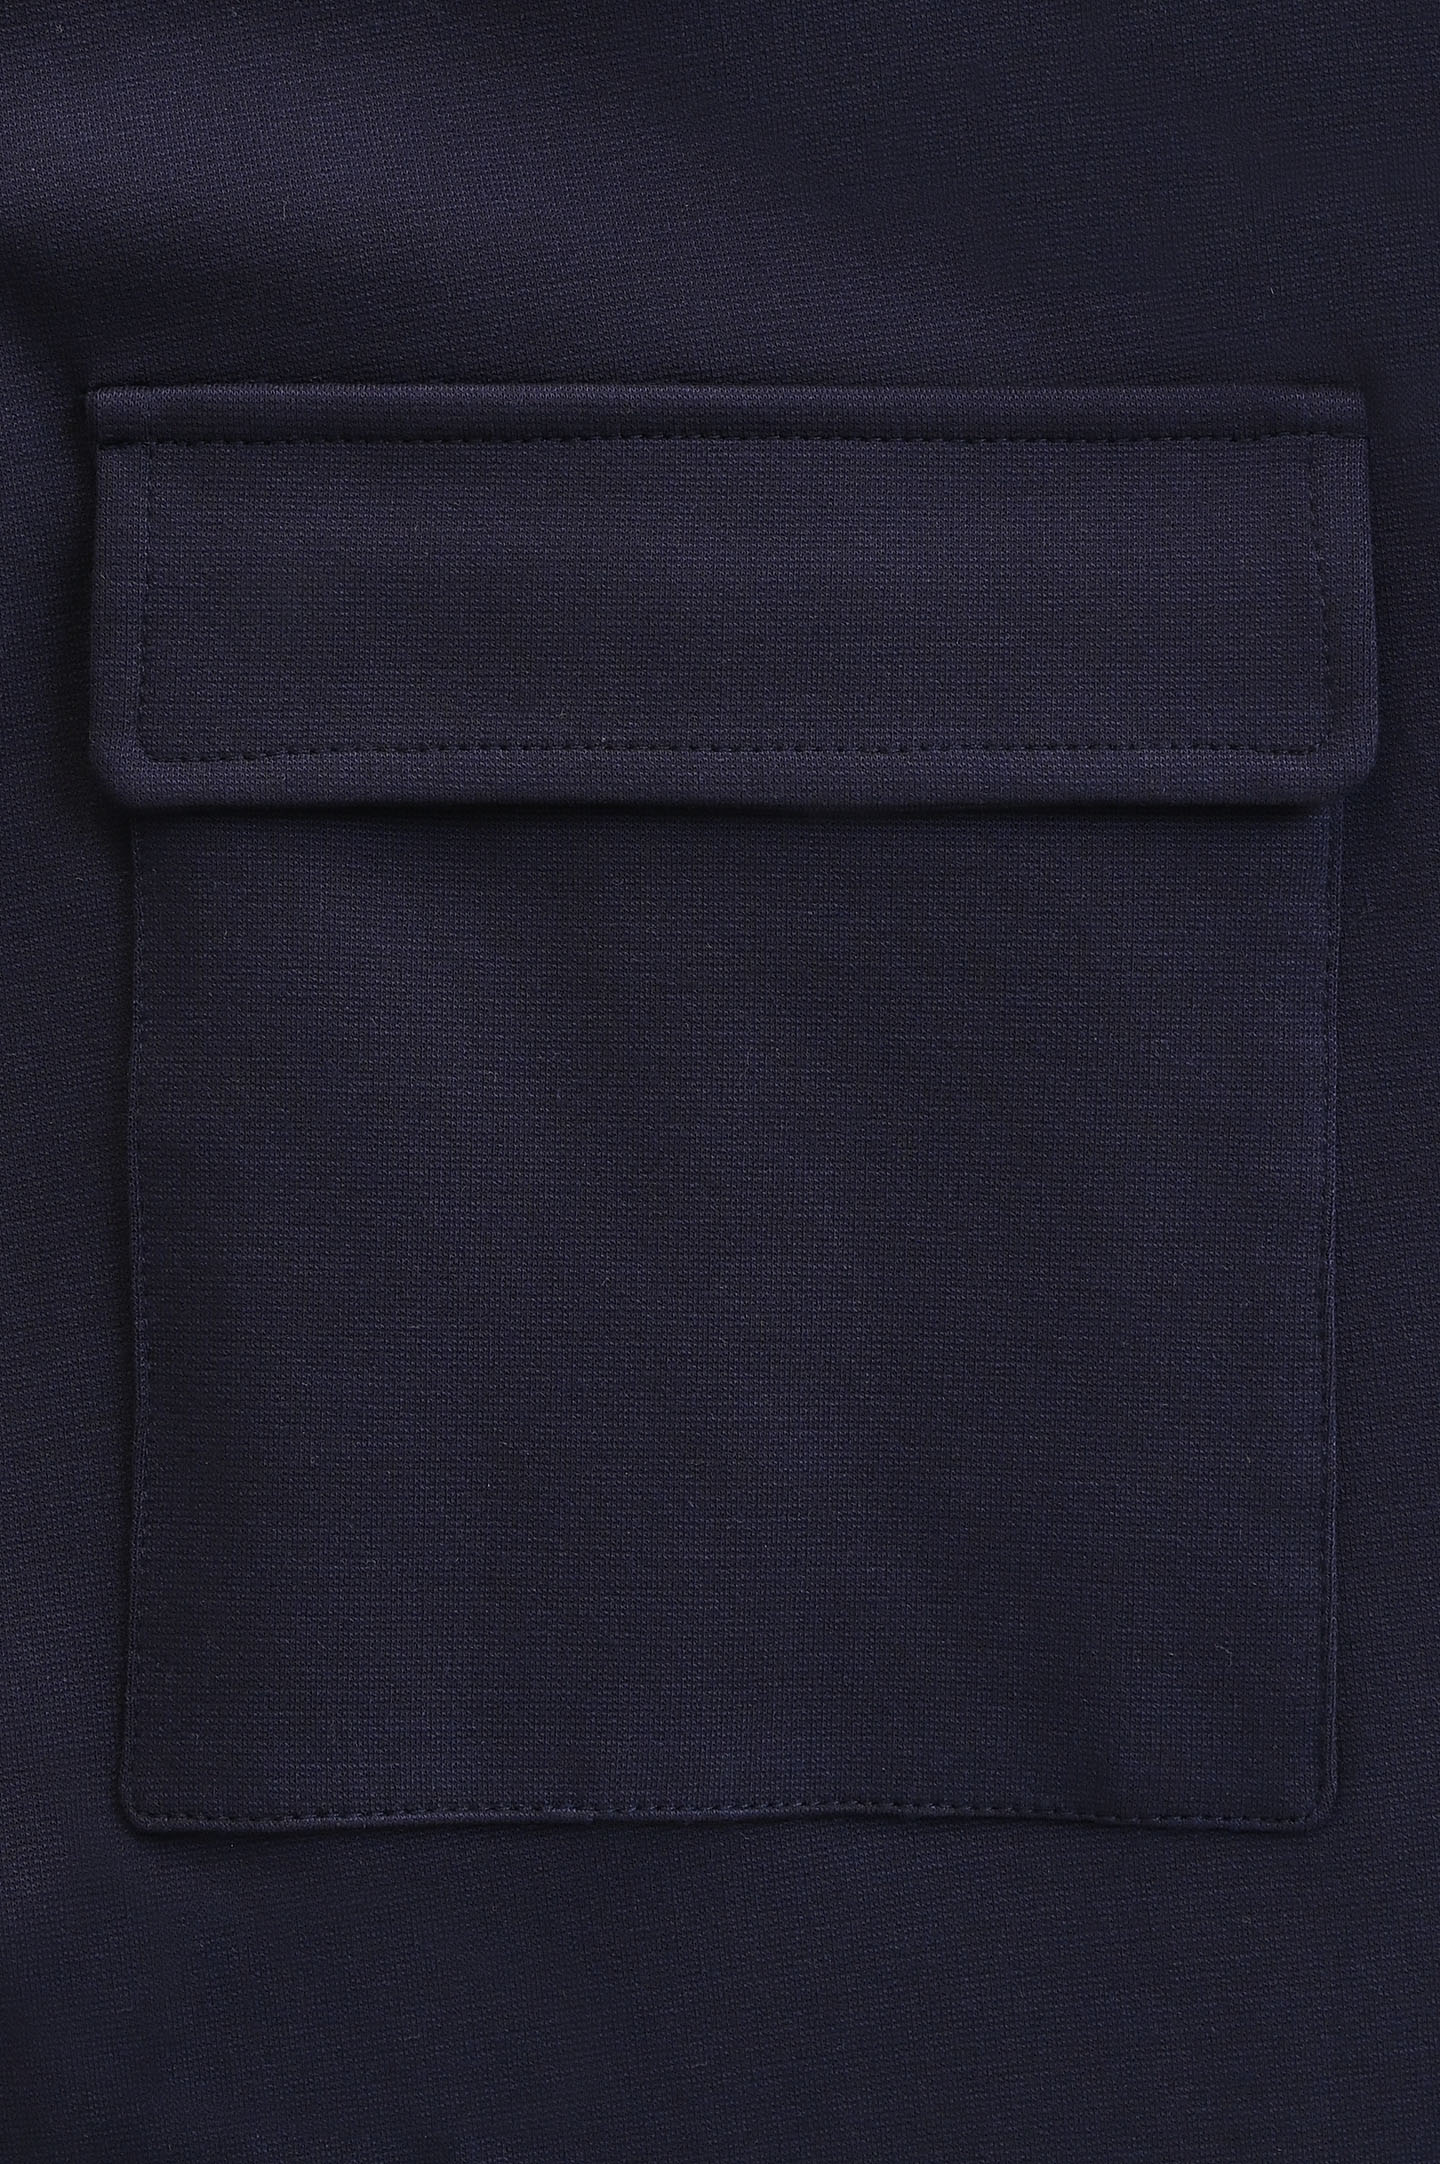 Брюки с накладными карманами CANALI SG02940 91689, цвет: Темно-синий, Мужской